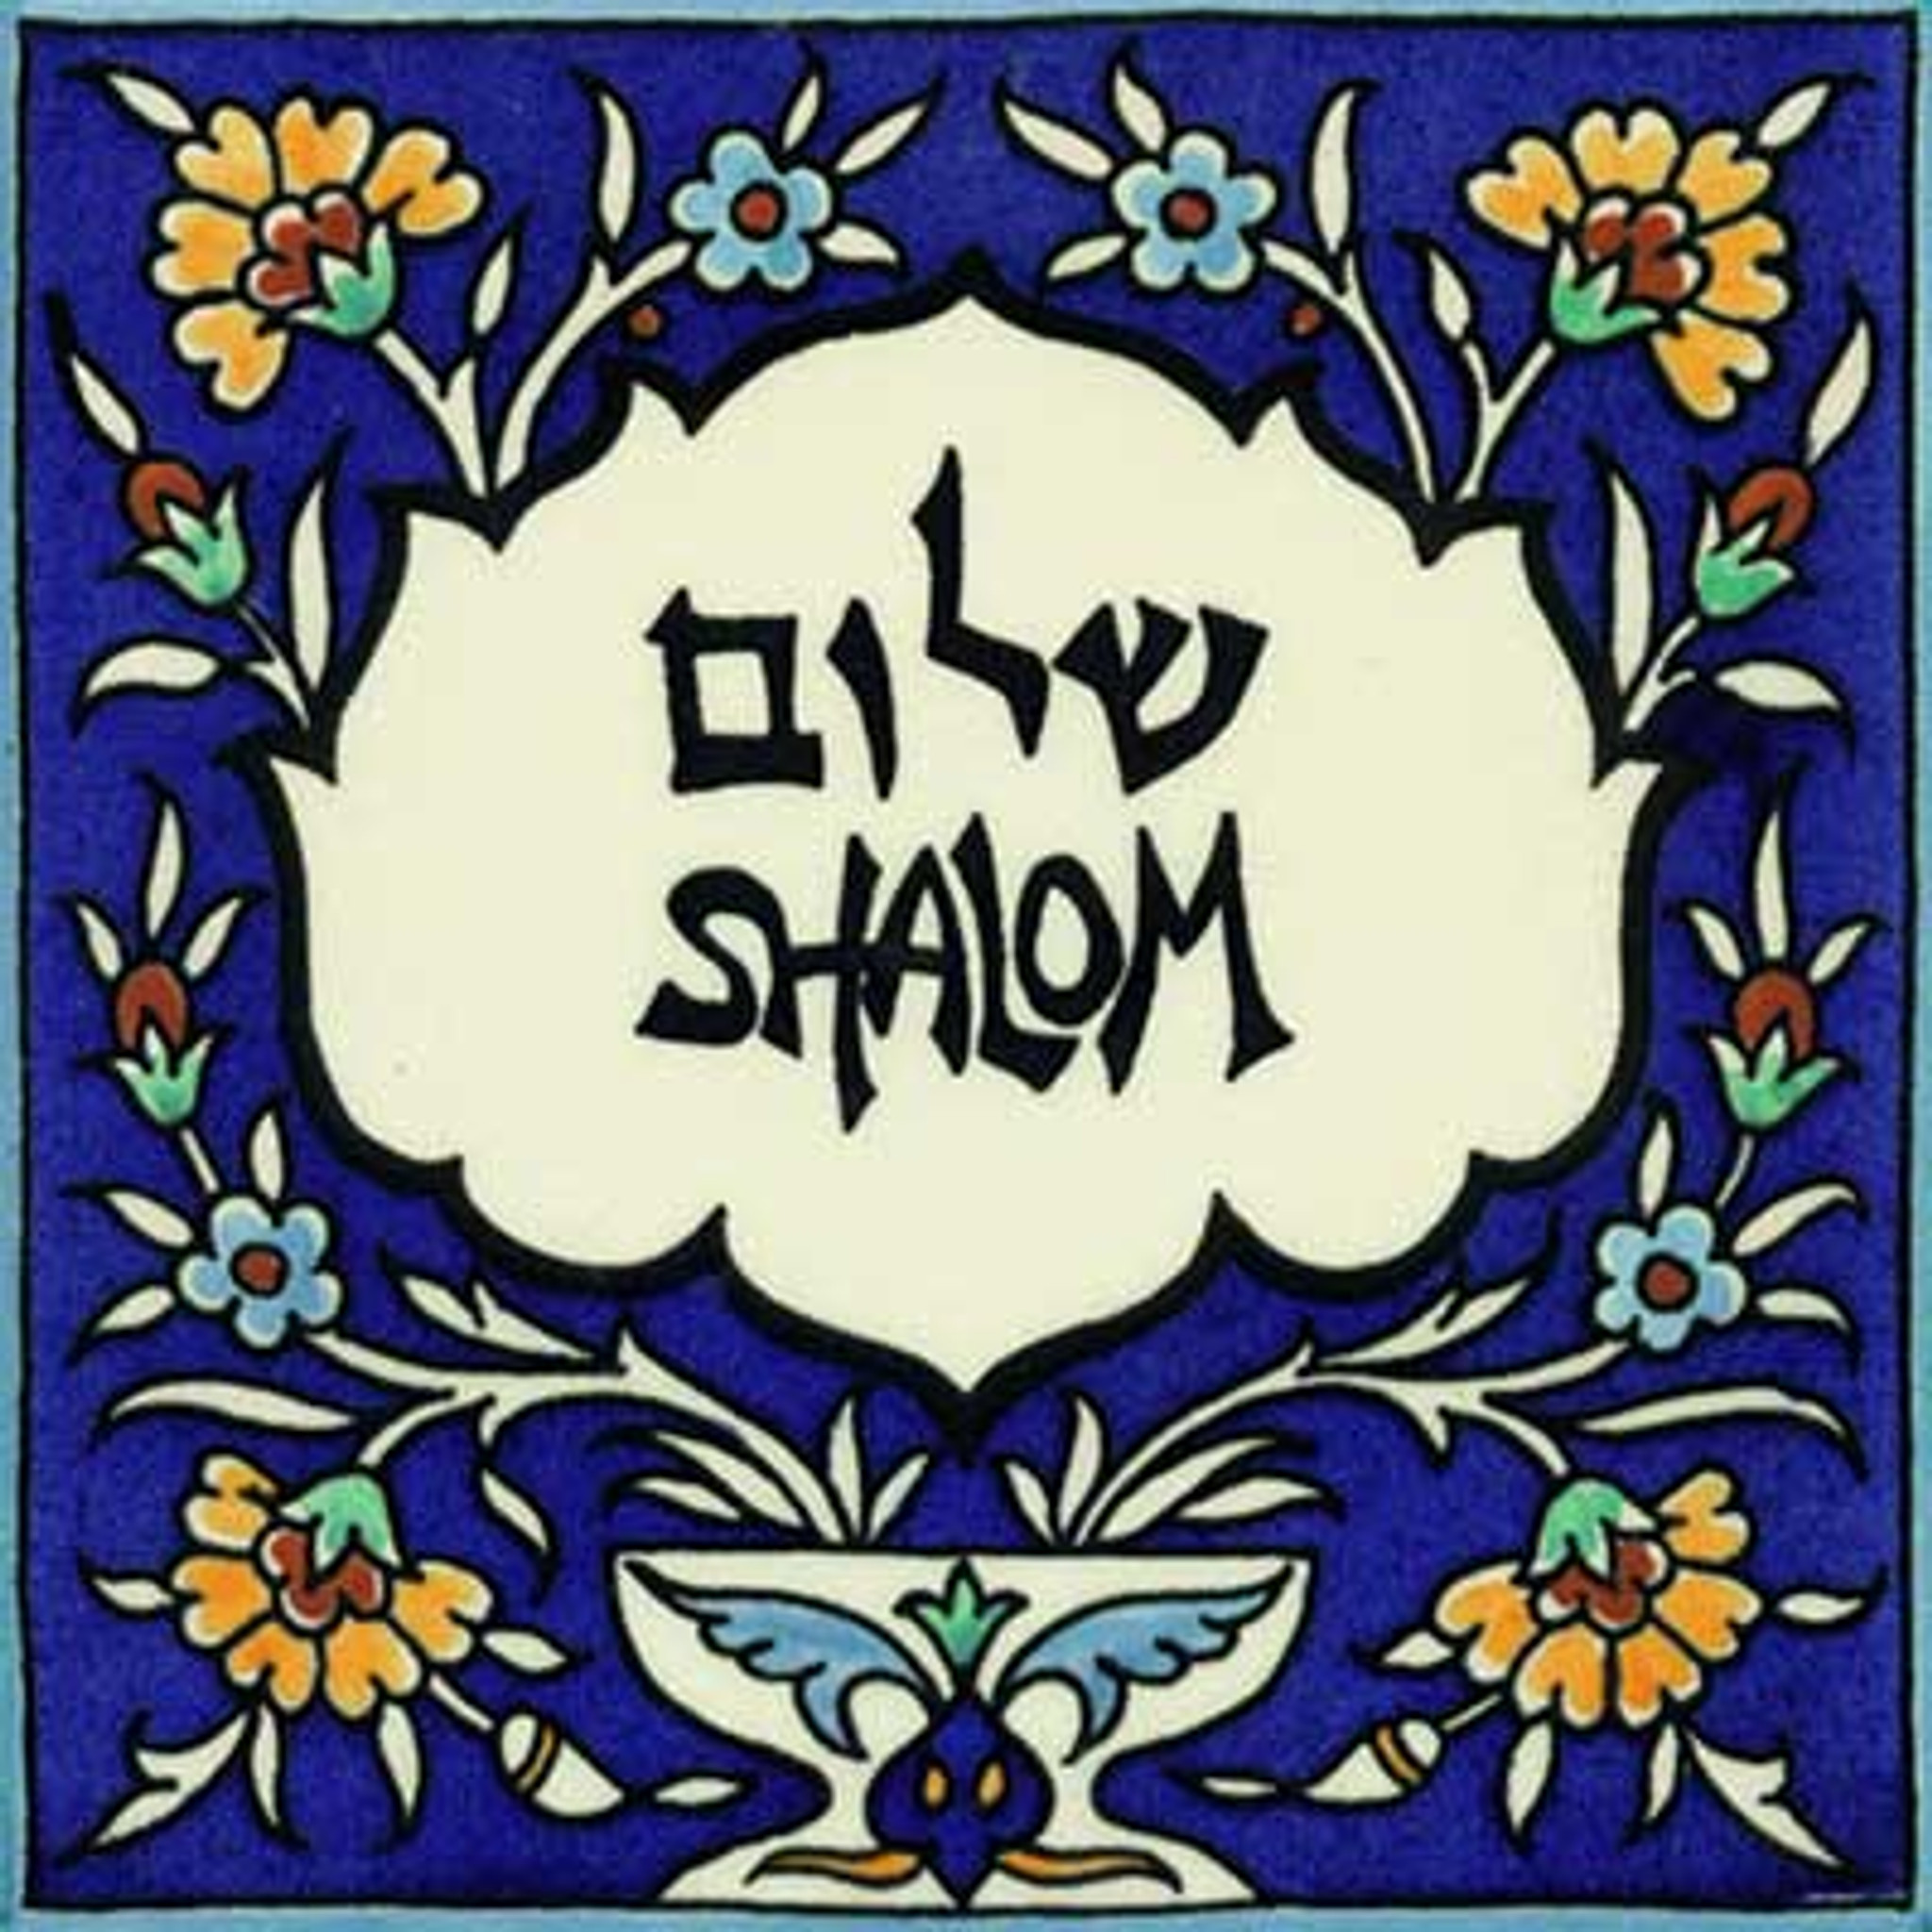 shalom in hebrew